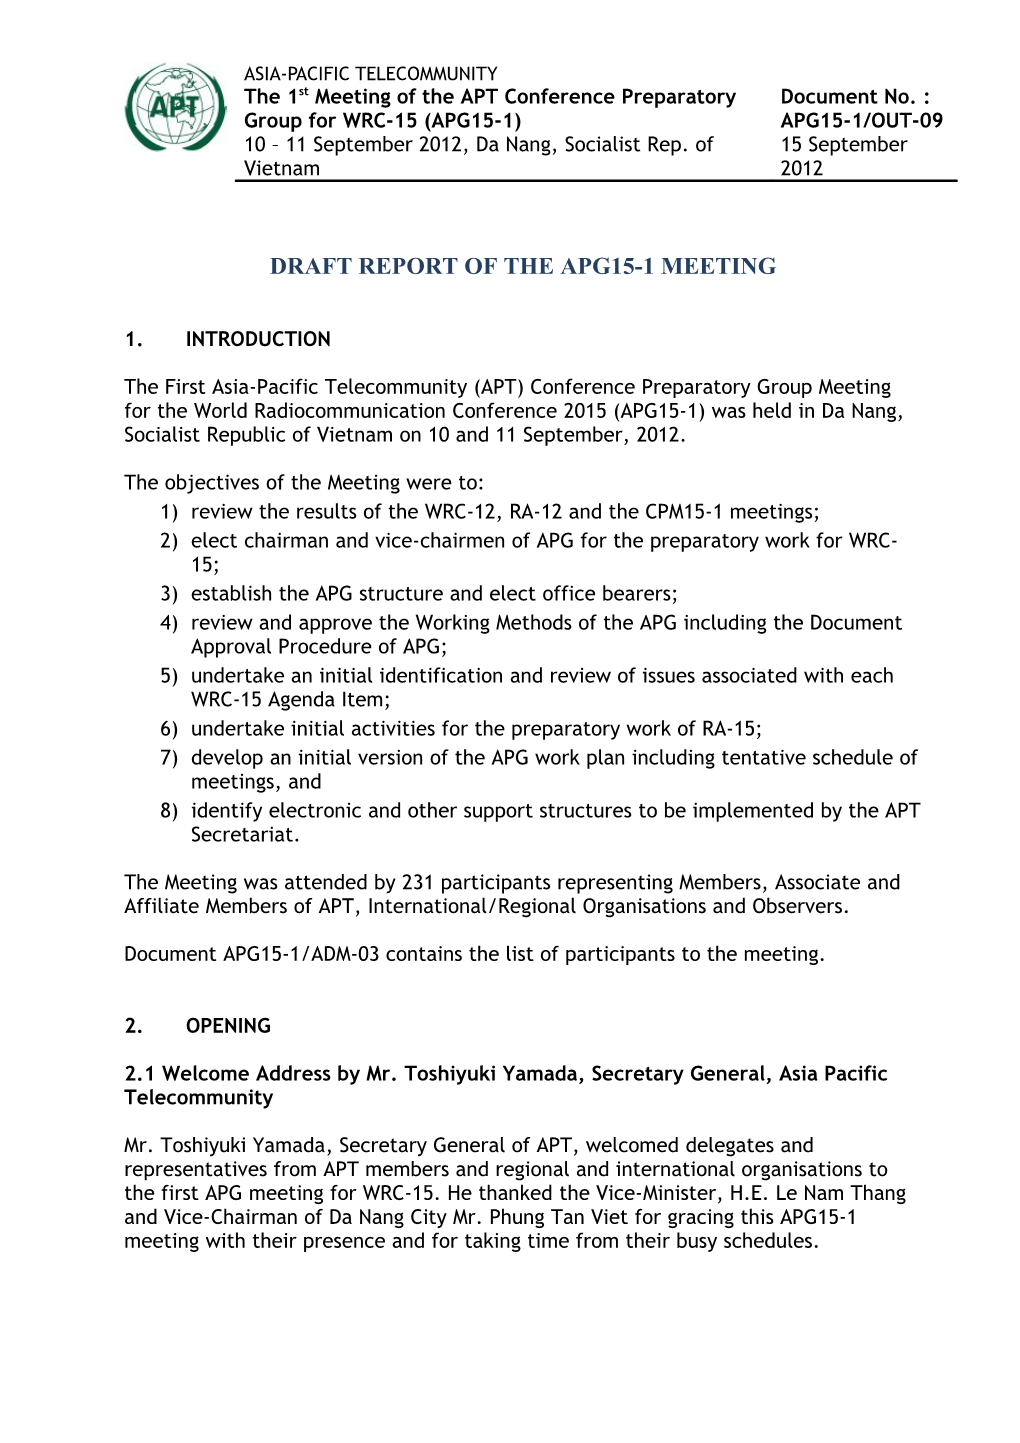 Draft Report of the Apg15-1Meeting